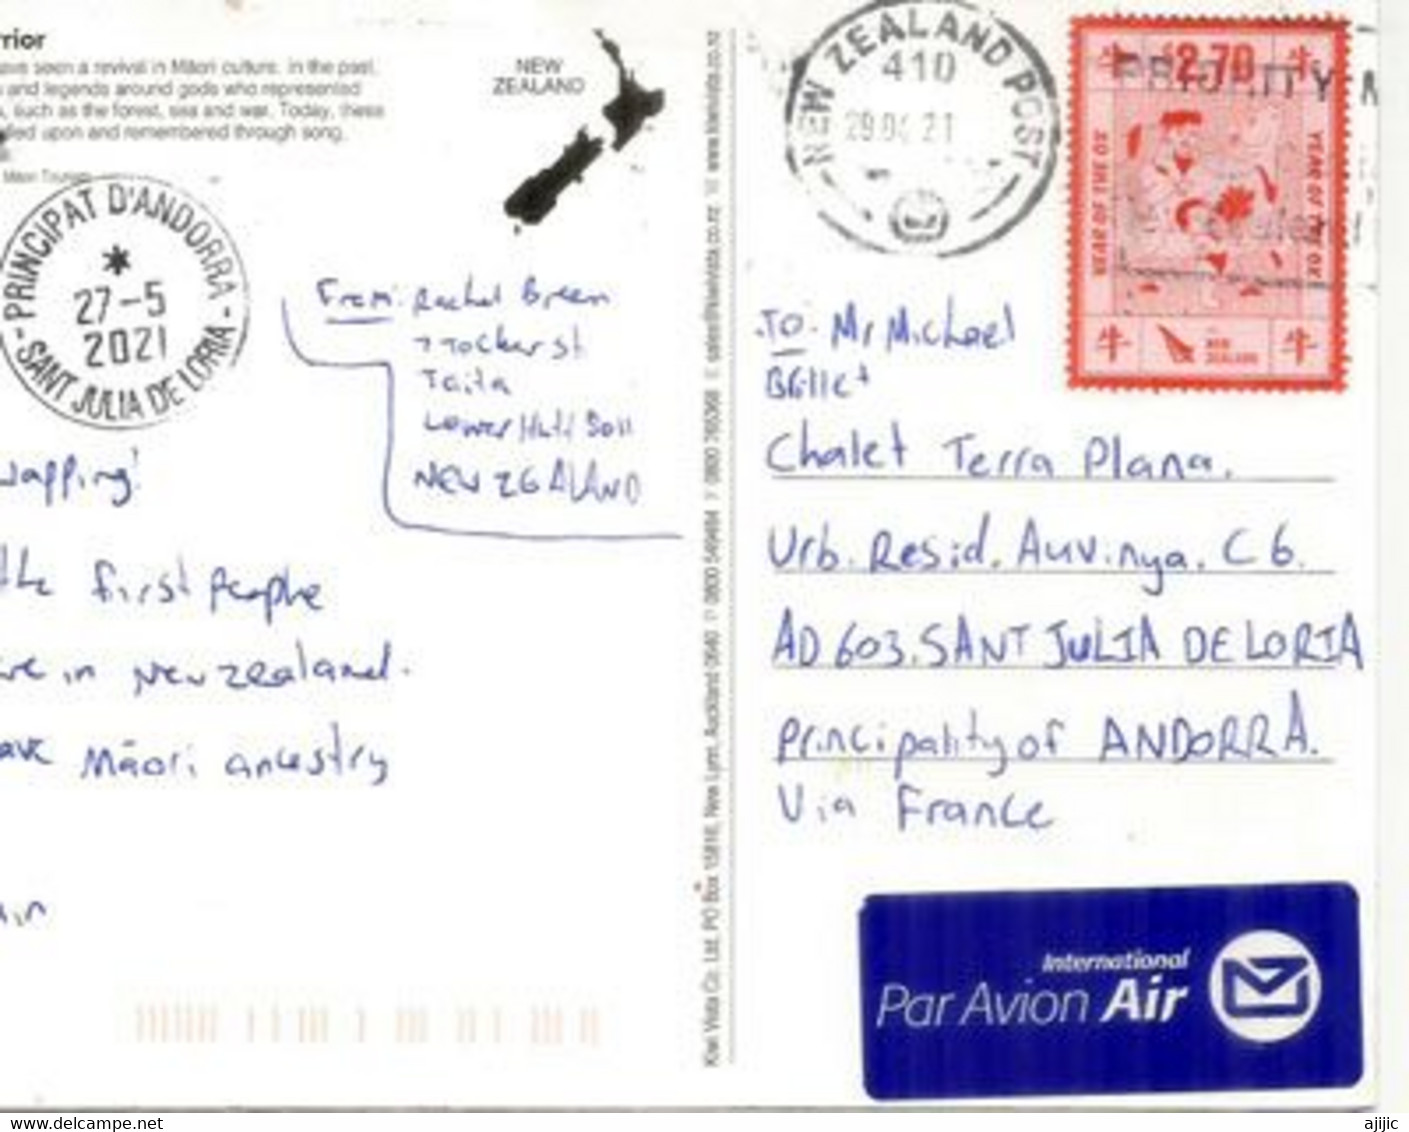 Maori Warrior (Guerrier Maori) New-Zealand.Carte Postale Adresse Andorra,avec Timbre à Date Arrivée.2 Photos Recto/verso - Oceania